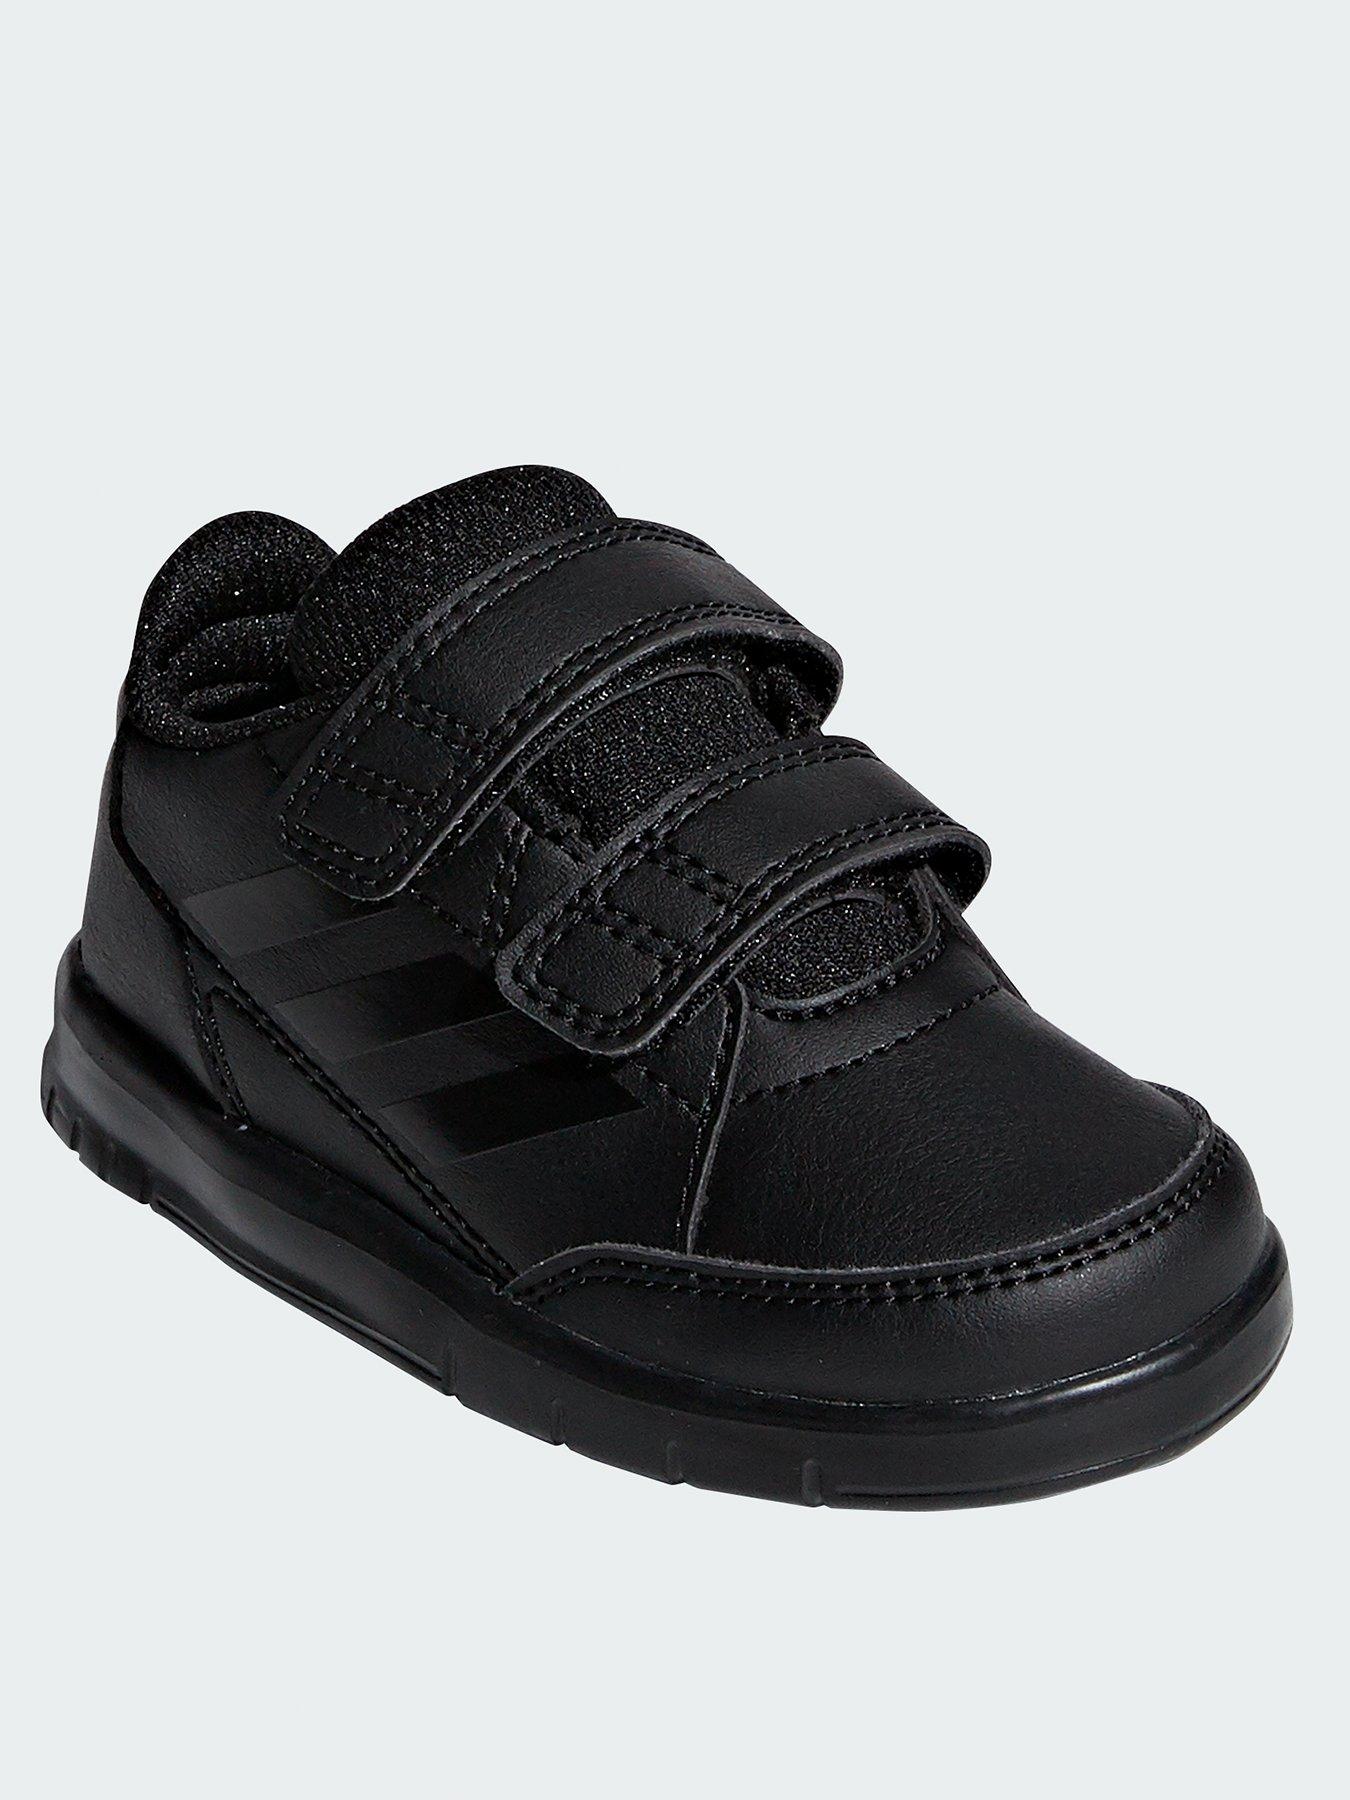 adidas altasport shoes black